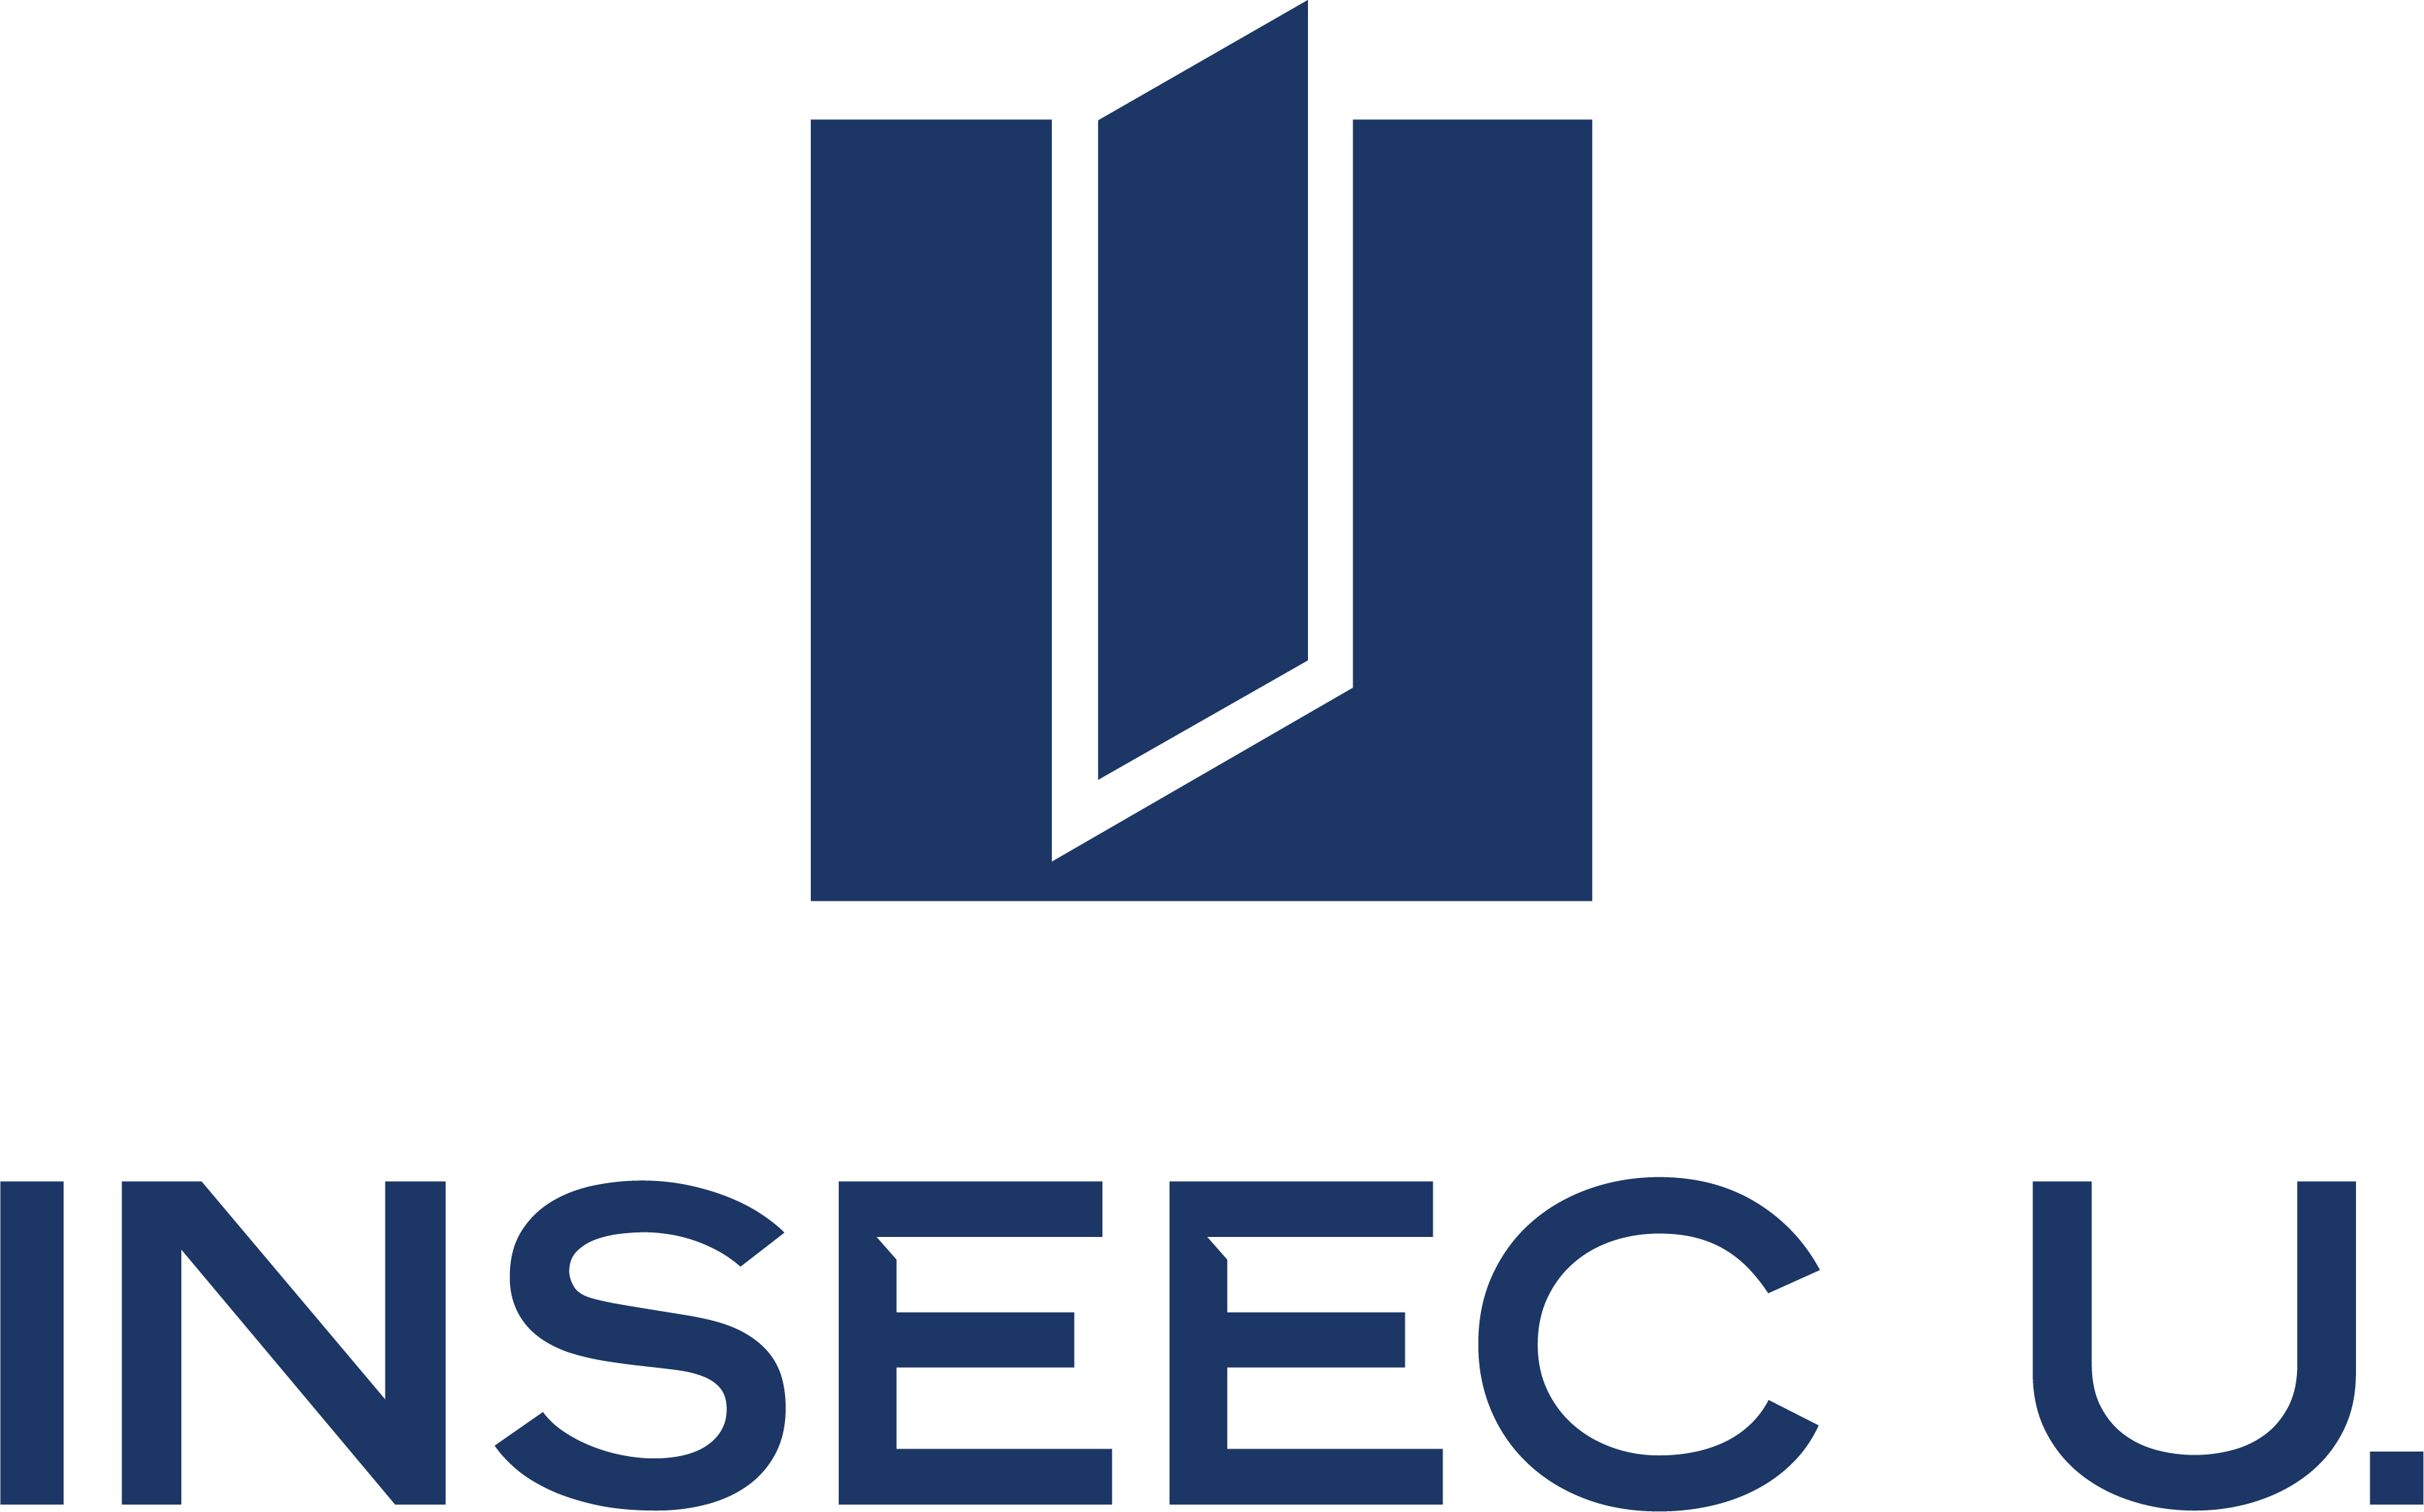 Logo INSEEC